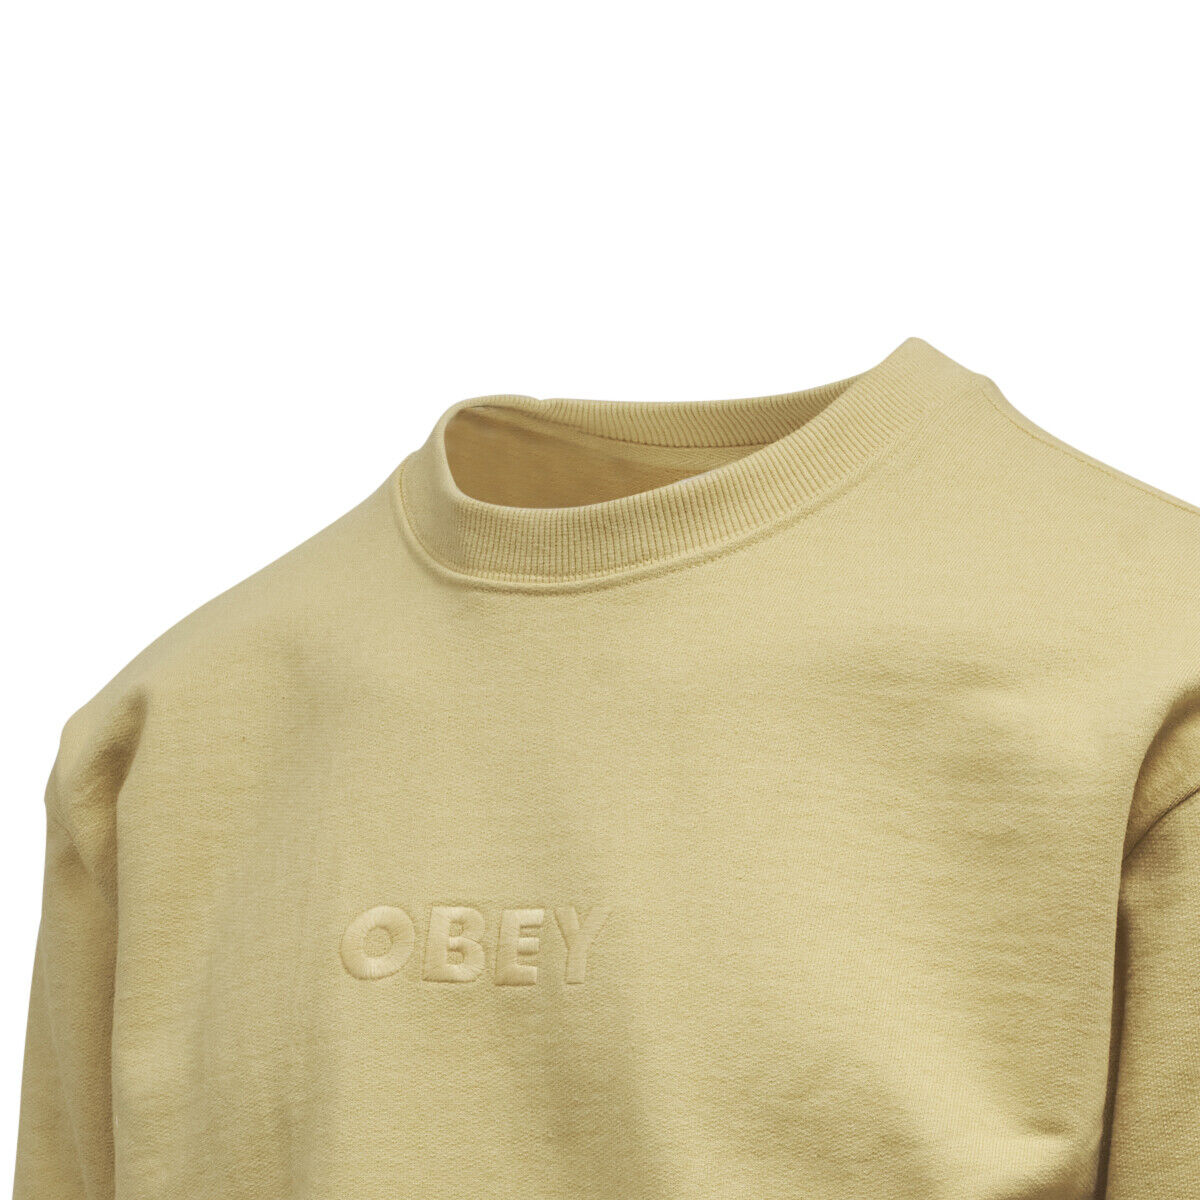 Obey Men's Golden Harvest Bold Ideals Crew Neck L/S Sweater